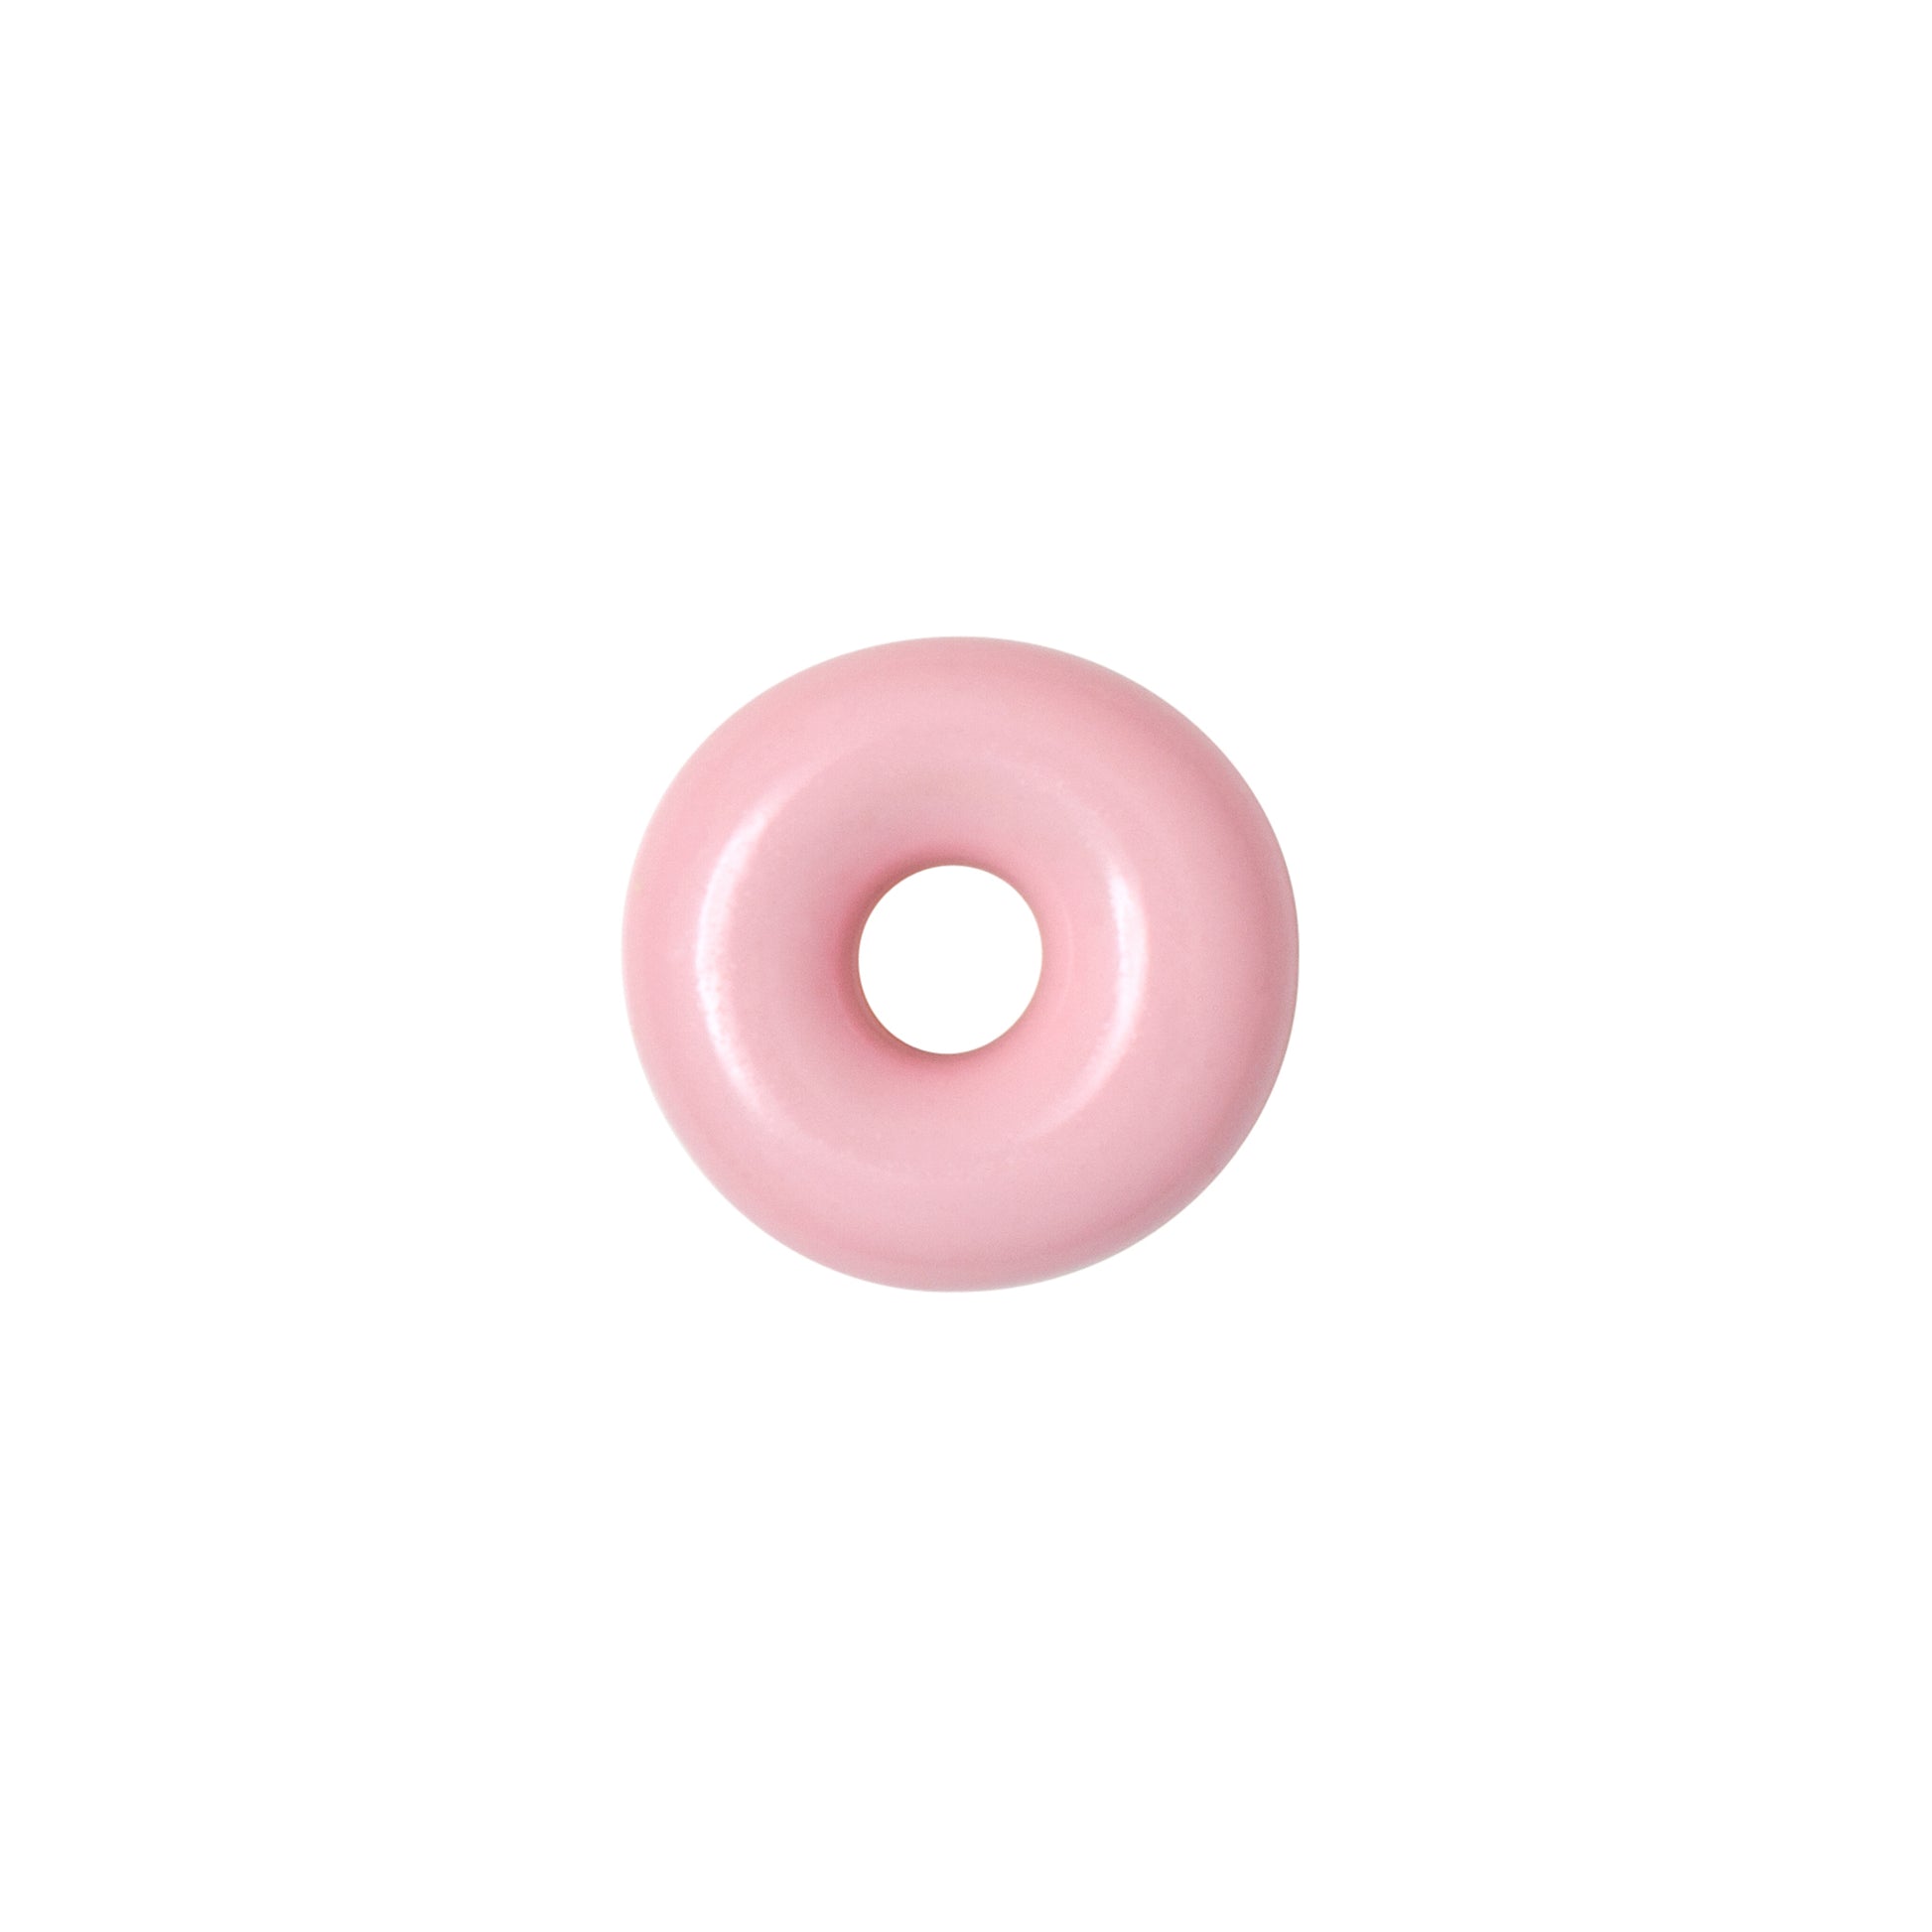 A Lulu Copenhagen Donut Single Stud - Light Pink enamel stud donut on a white background.